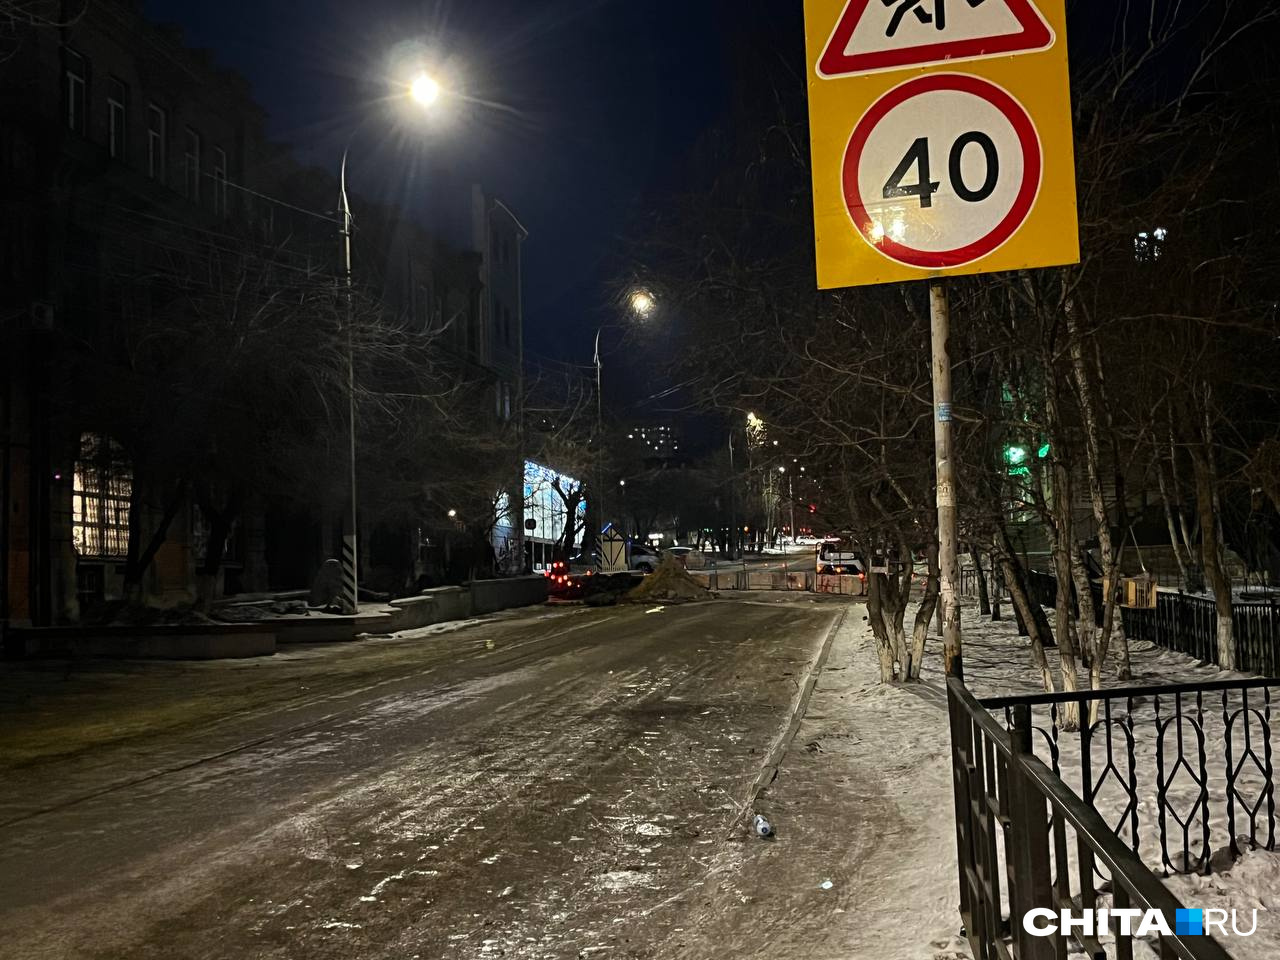 Участок на улице 9 Января в Чите перекрыли на три дня из-за аварии